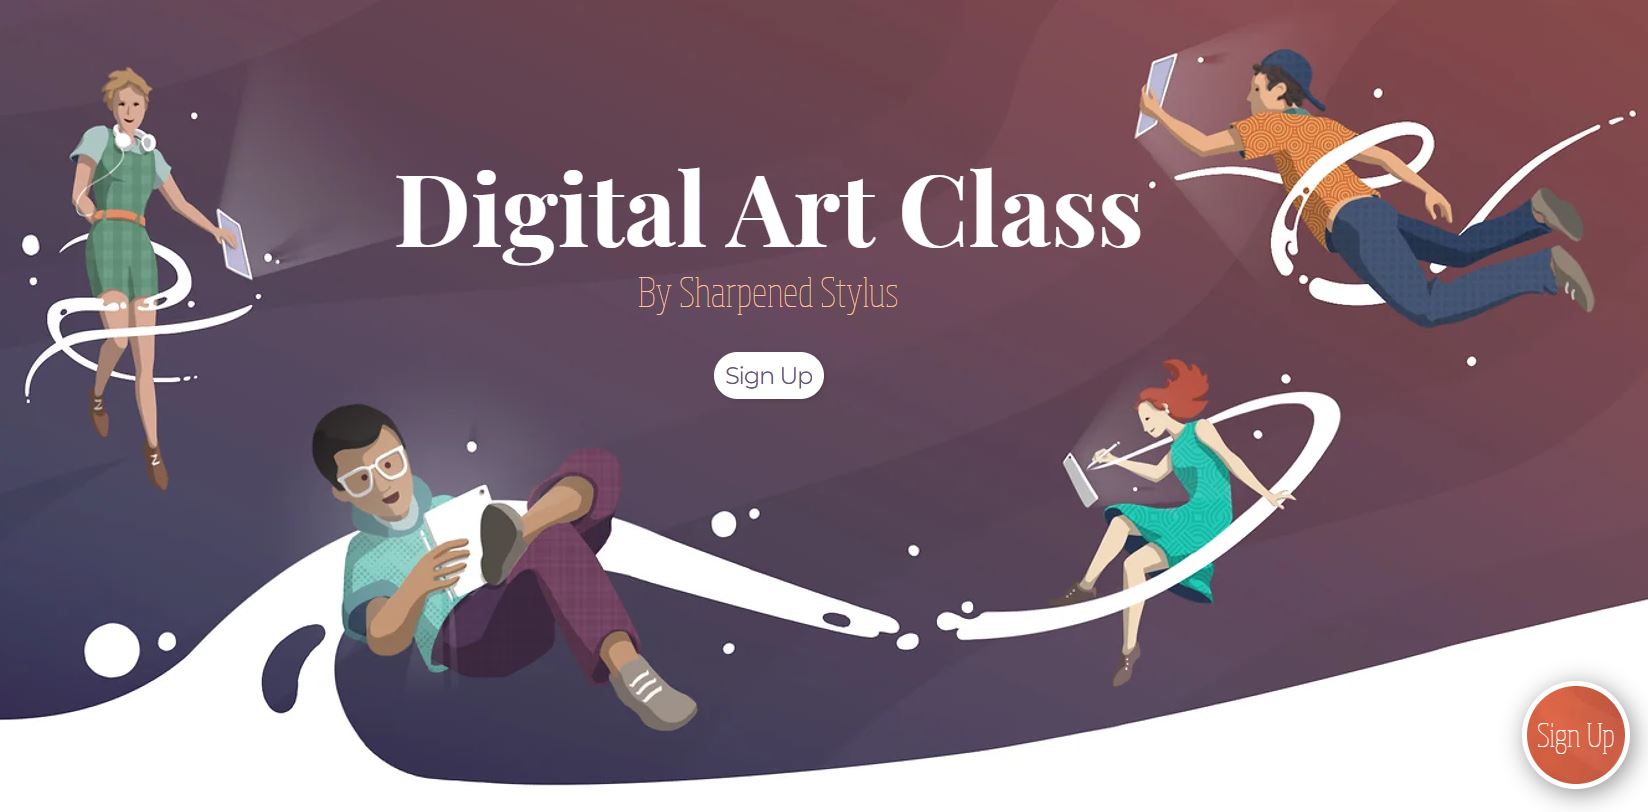 Digital Art Class available. Go to sharpenedstylus.com for details.